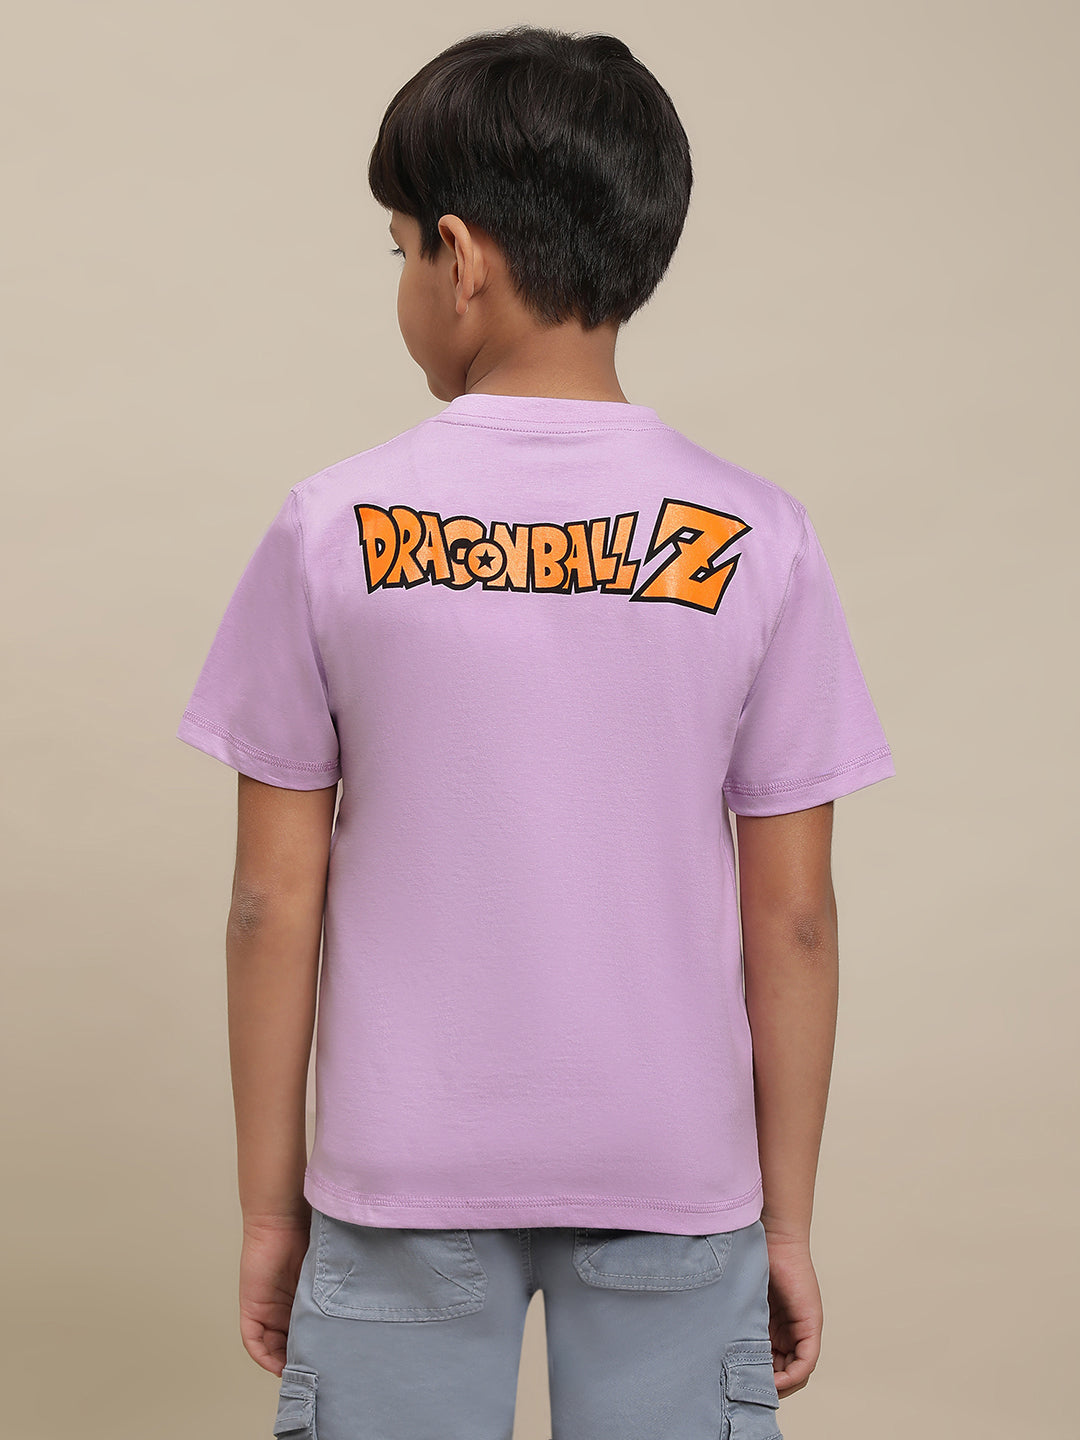 Kidsville Dragon Ball Z Printed Red Tshirt For Boys